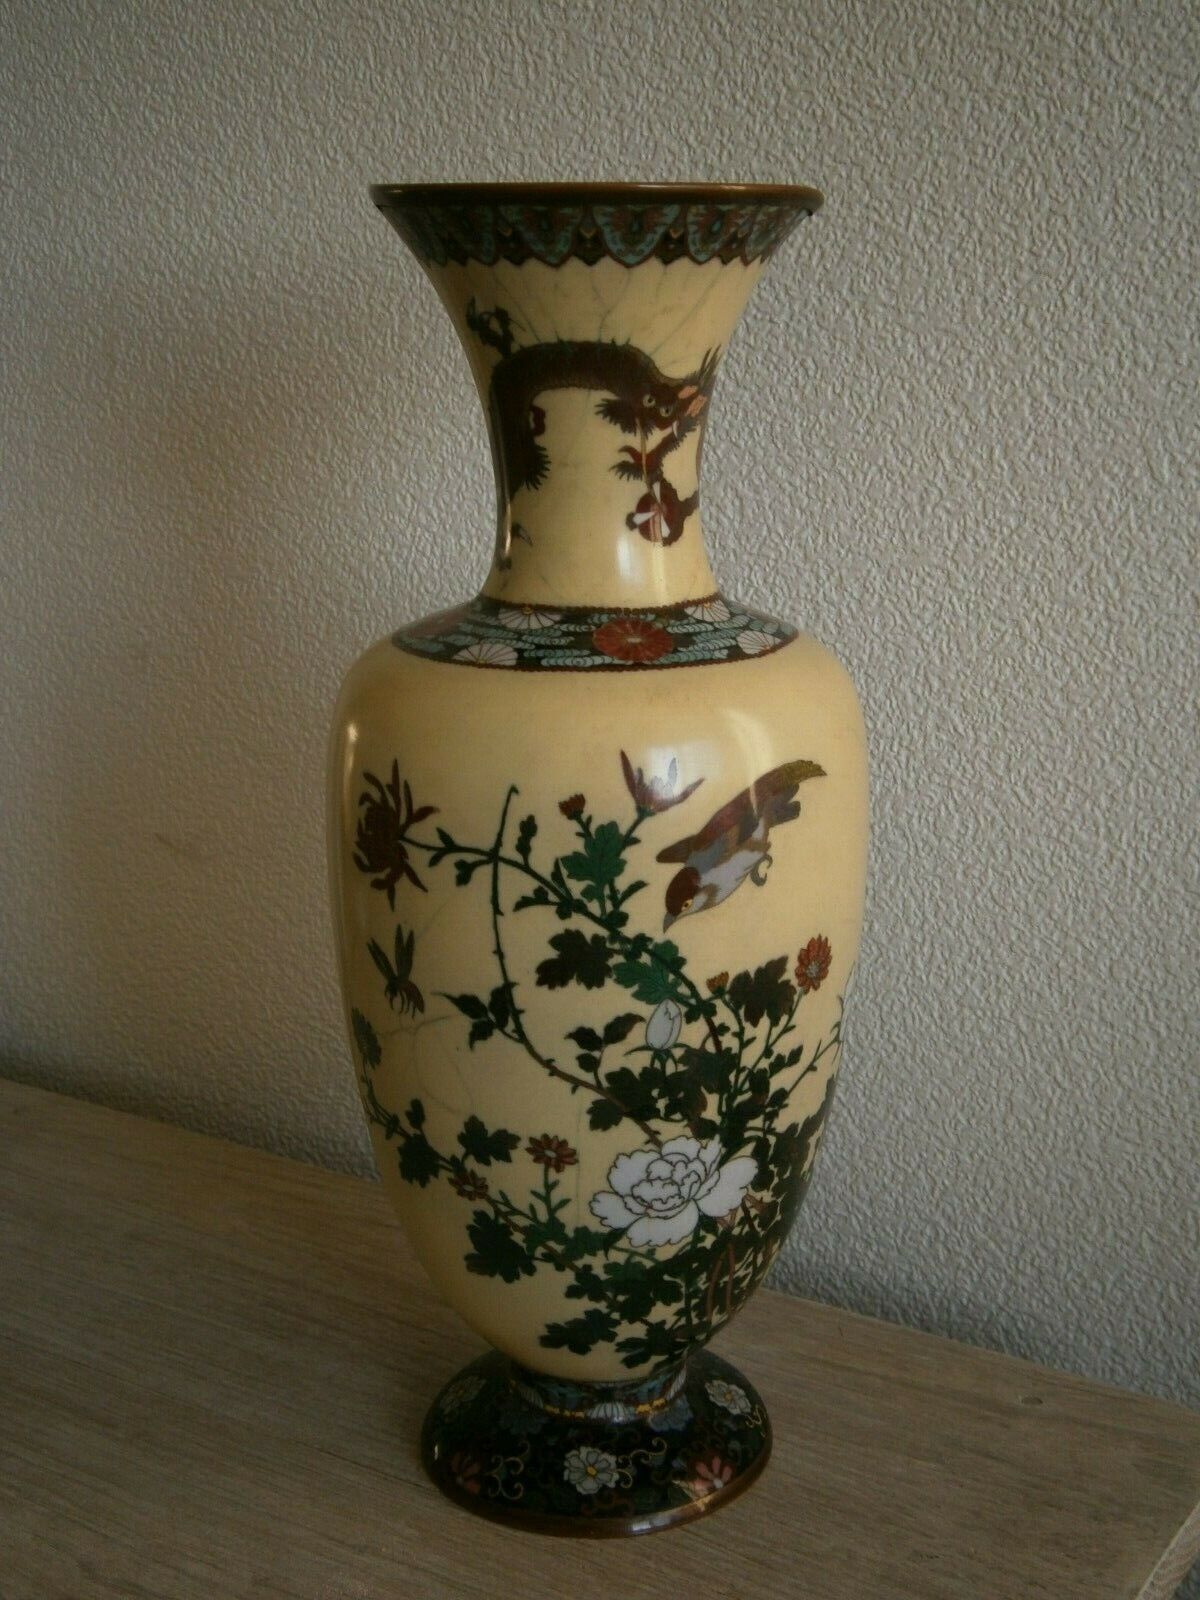 Vase Copper Cloisonne Enamel China 19° S Decoration Art Asia Shell Egg Antique